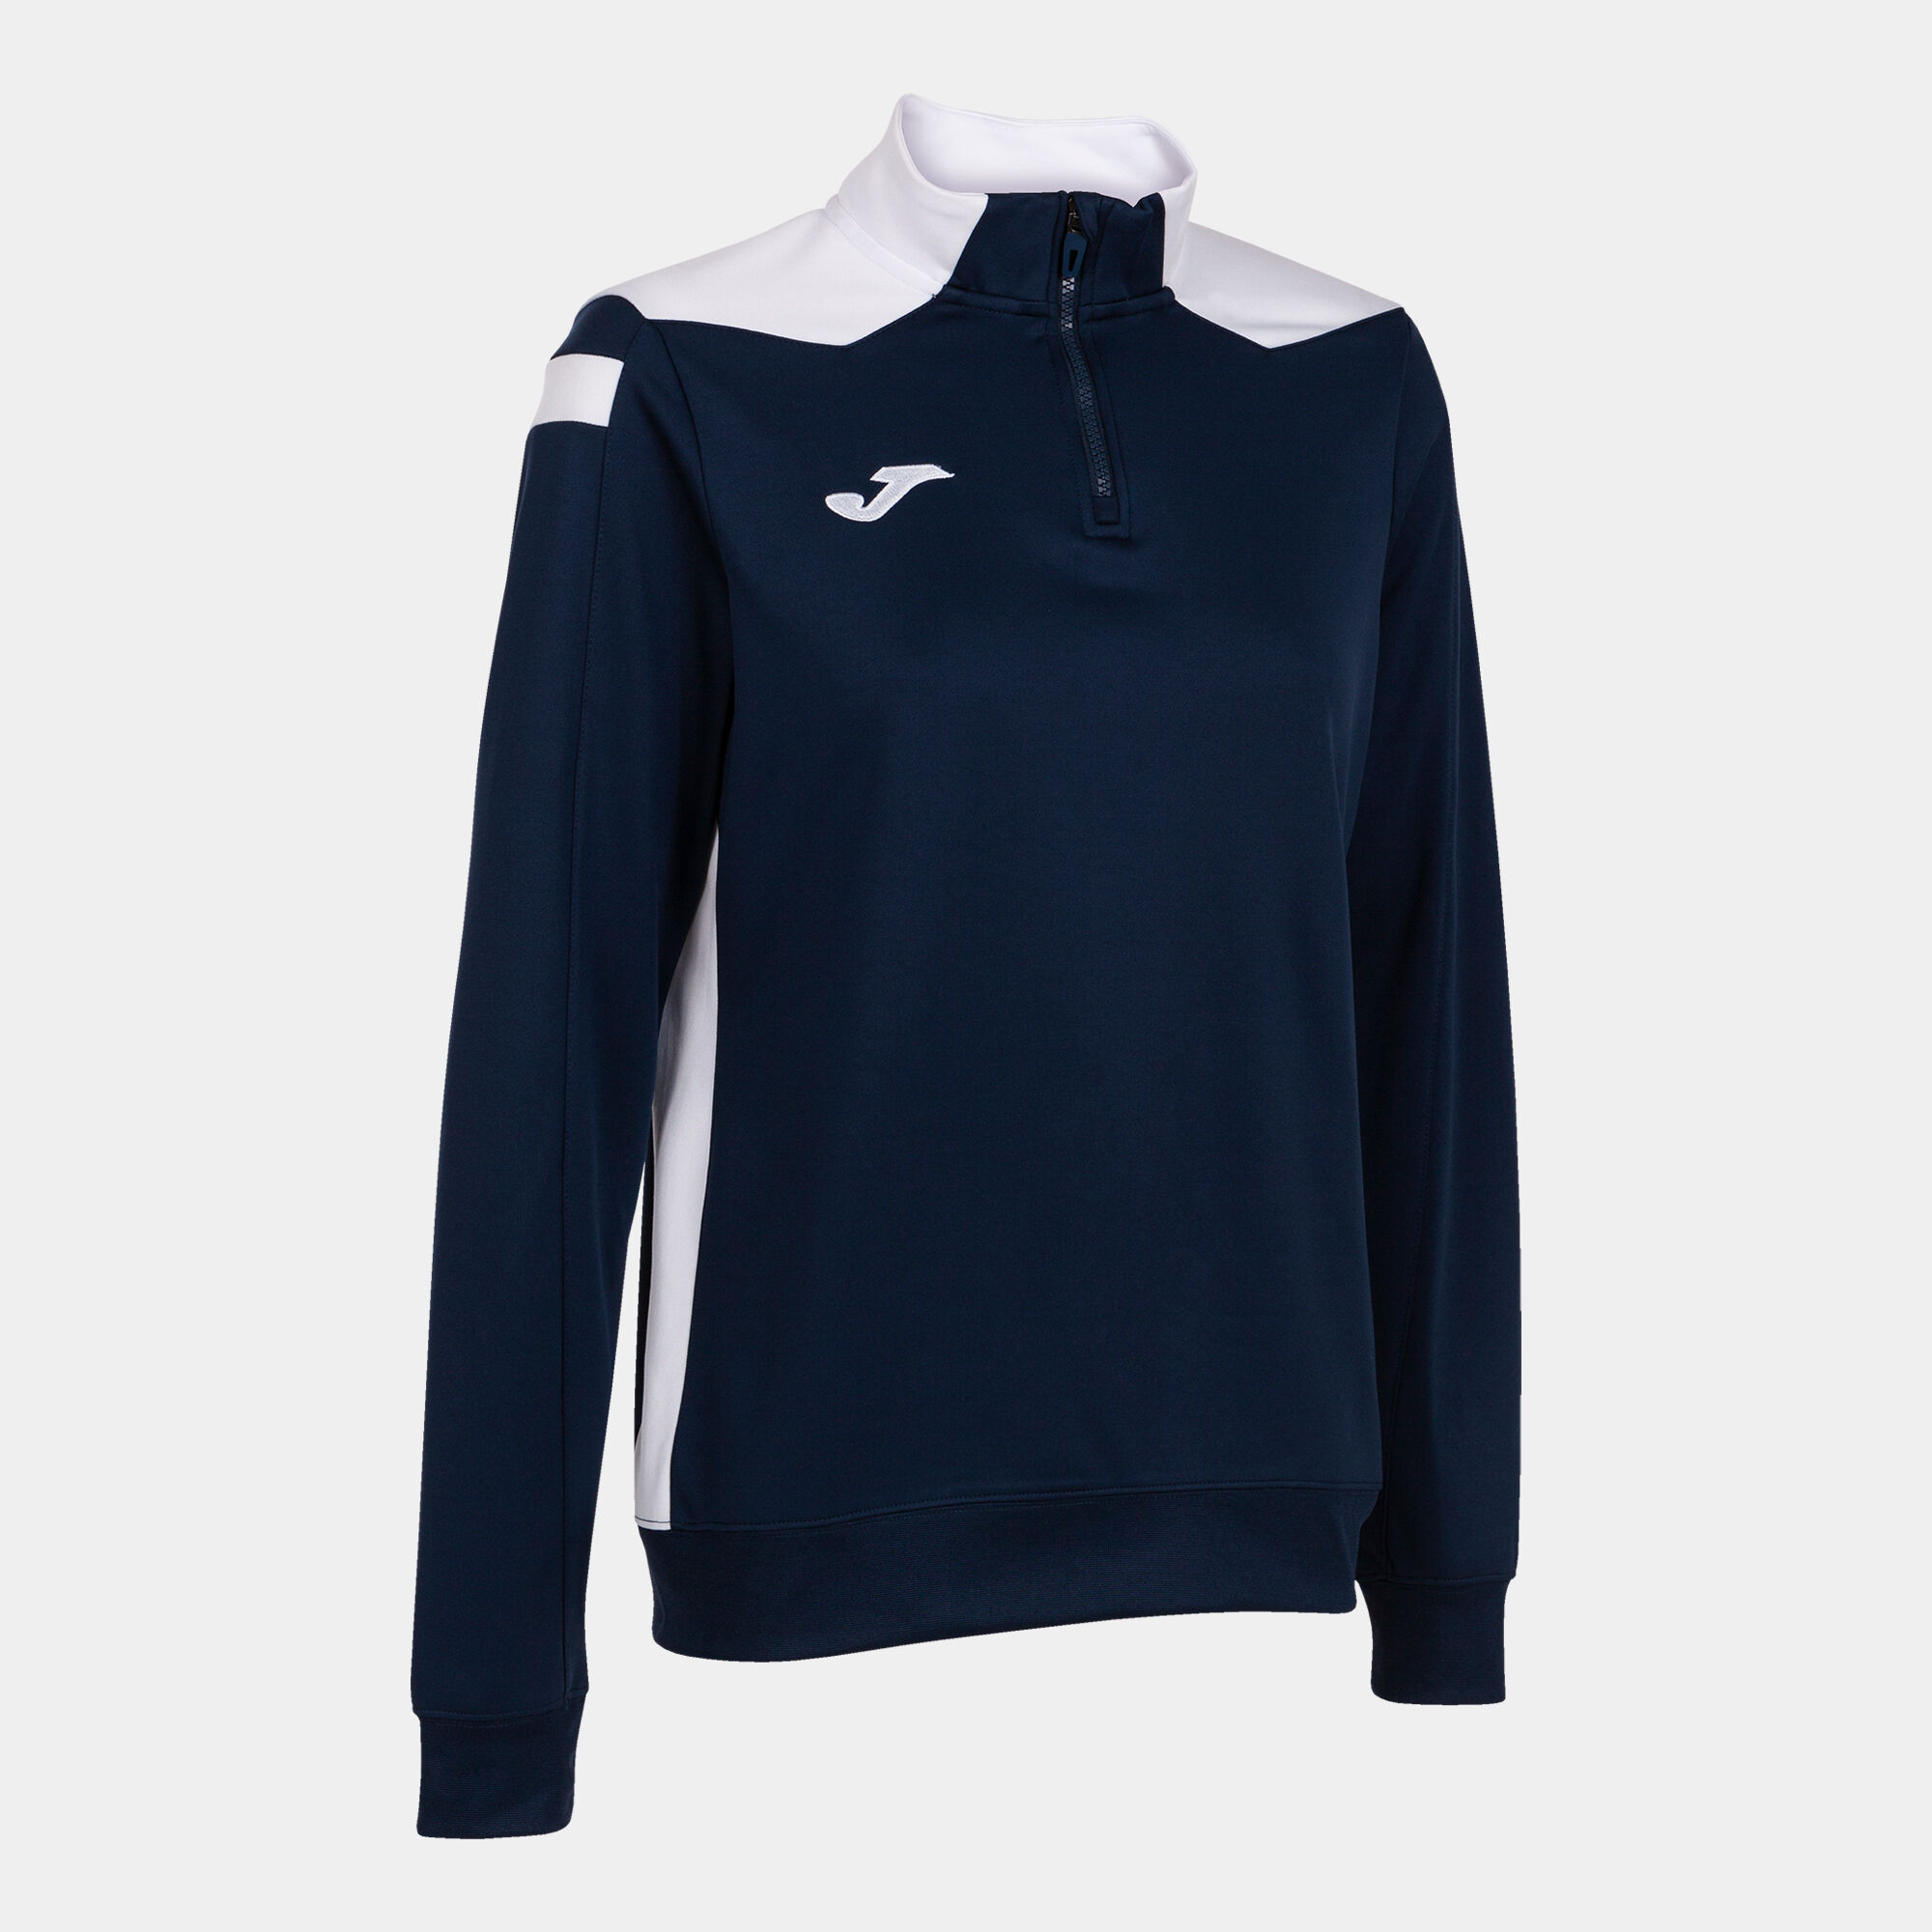 Sweat-shirt femme Championship VI bleu marine blanc